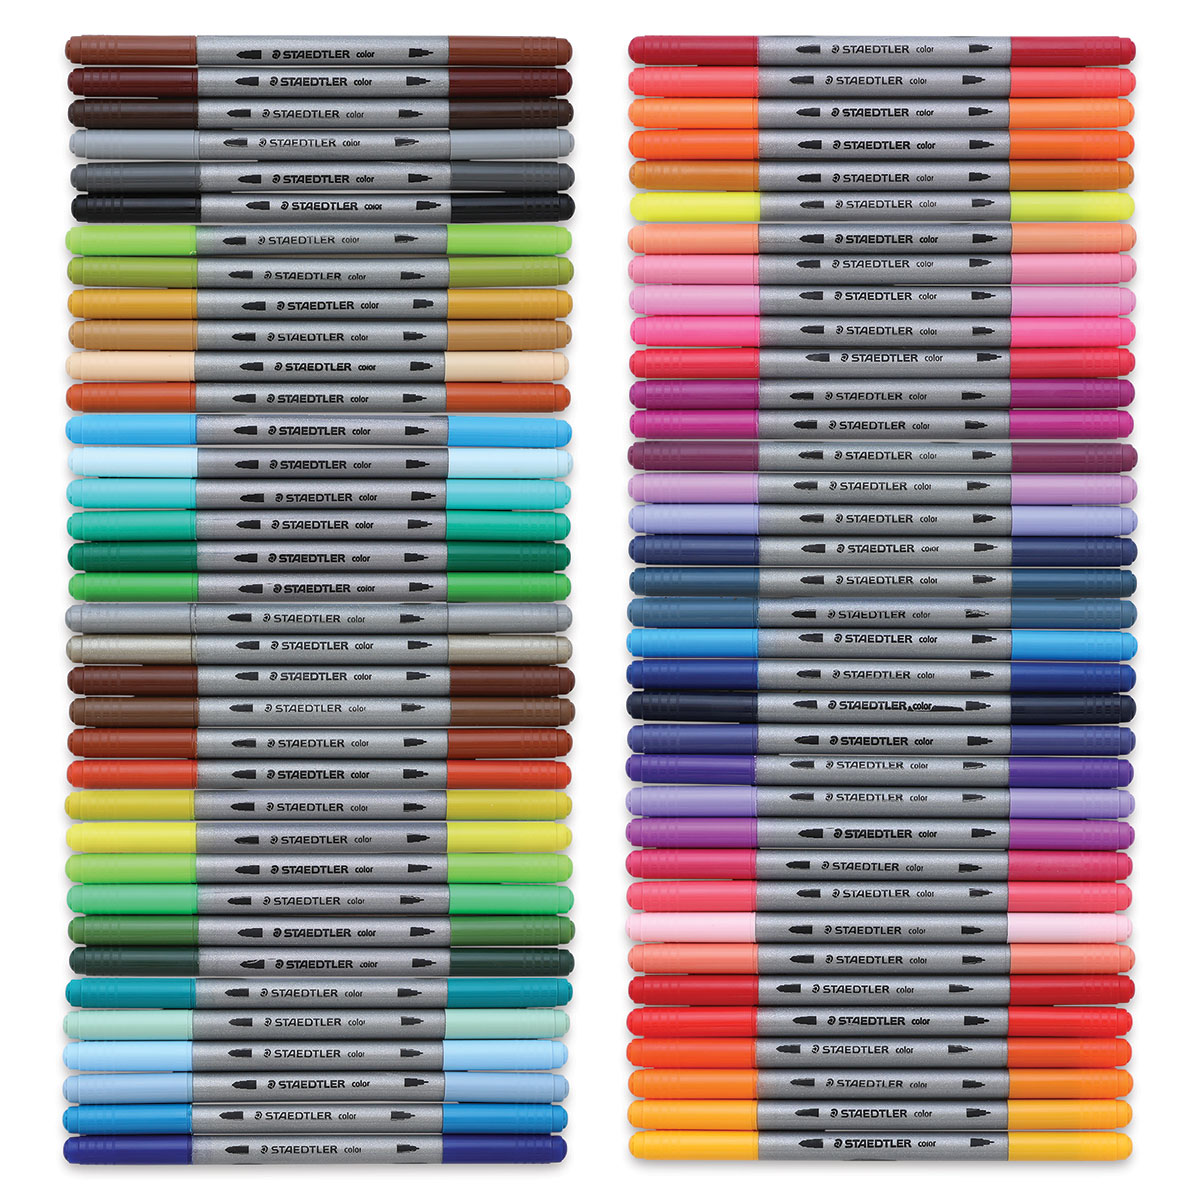 Edding 1200 Fibre Tip Pens - Assorted Colours (Blister of 3), 4-1200-3-1999